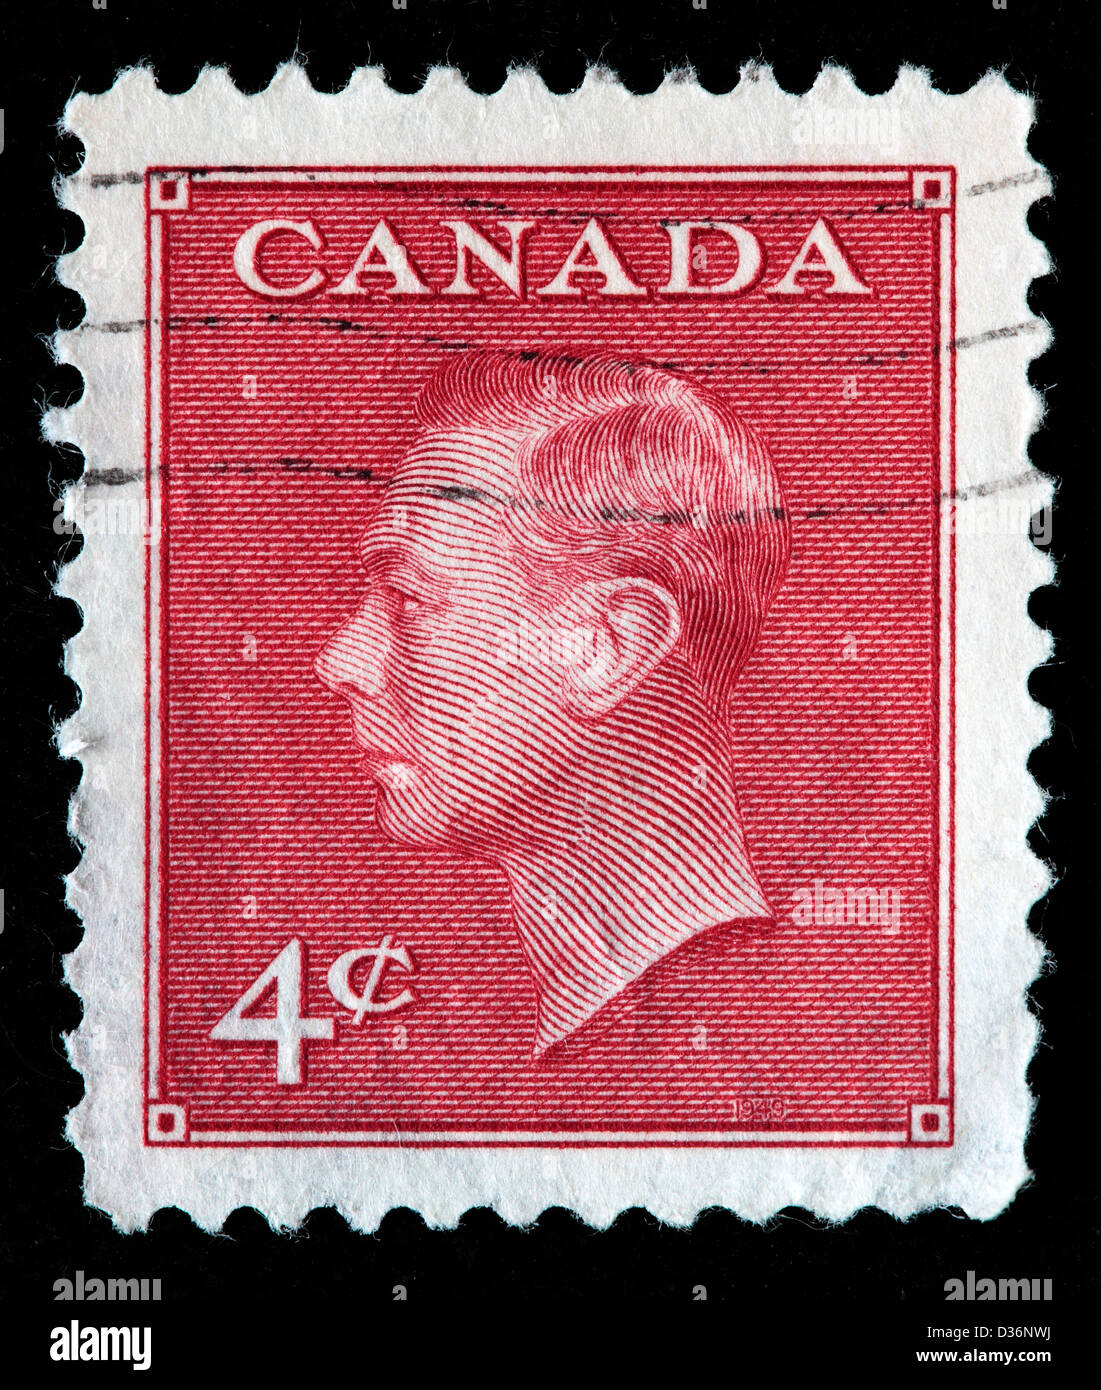 King George VI, postage stamp, Canada, 1949 Stock Photo